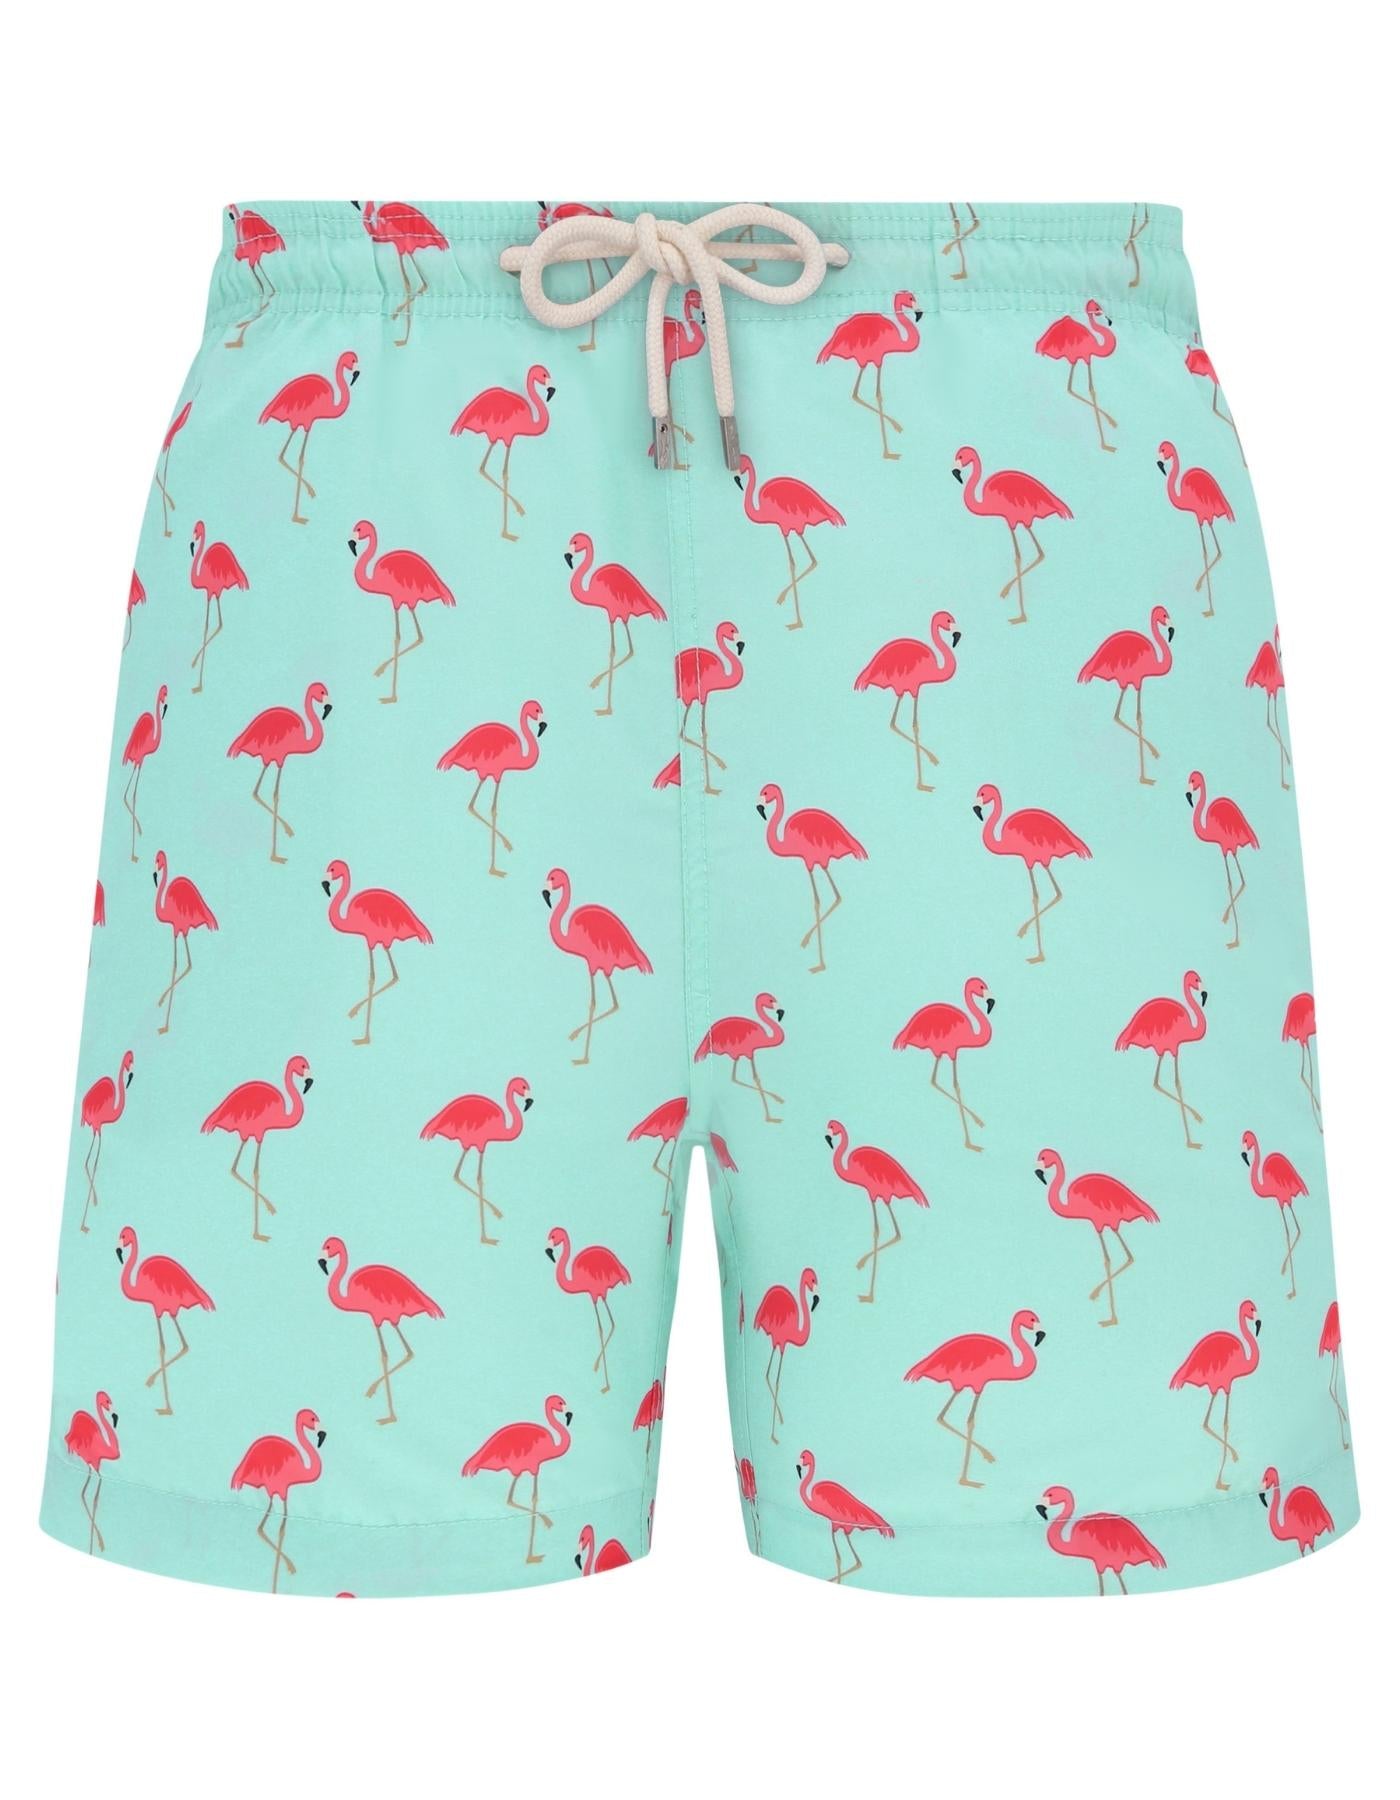 Sandbar_father_and_son_swim_shorts_pink_flamingo